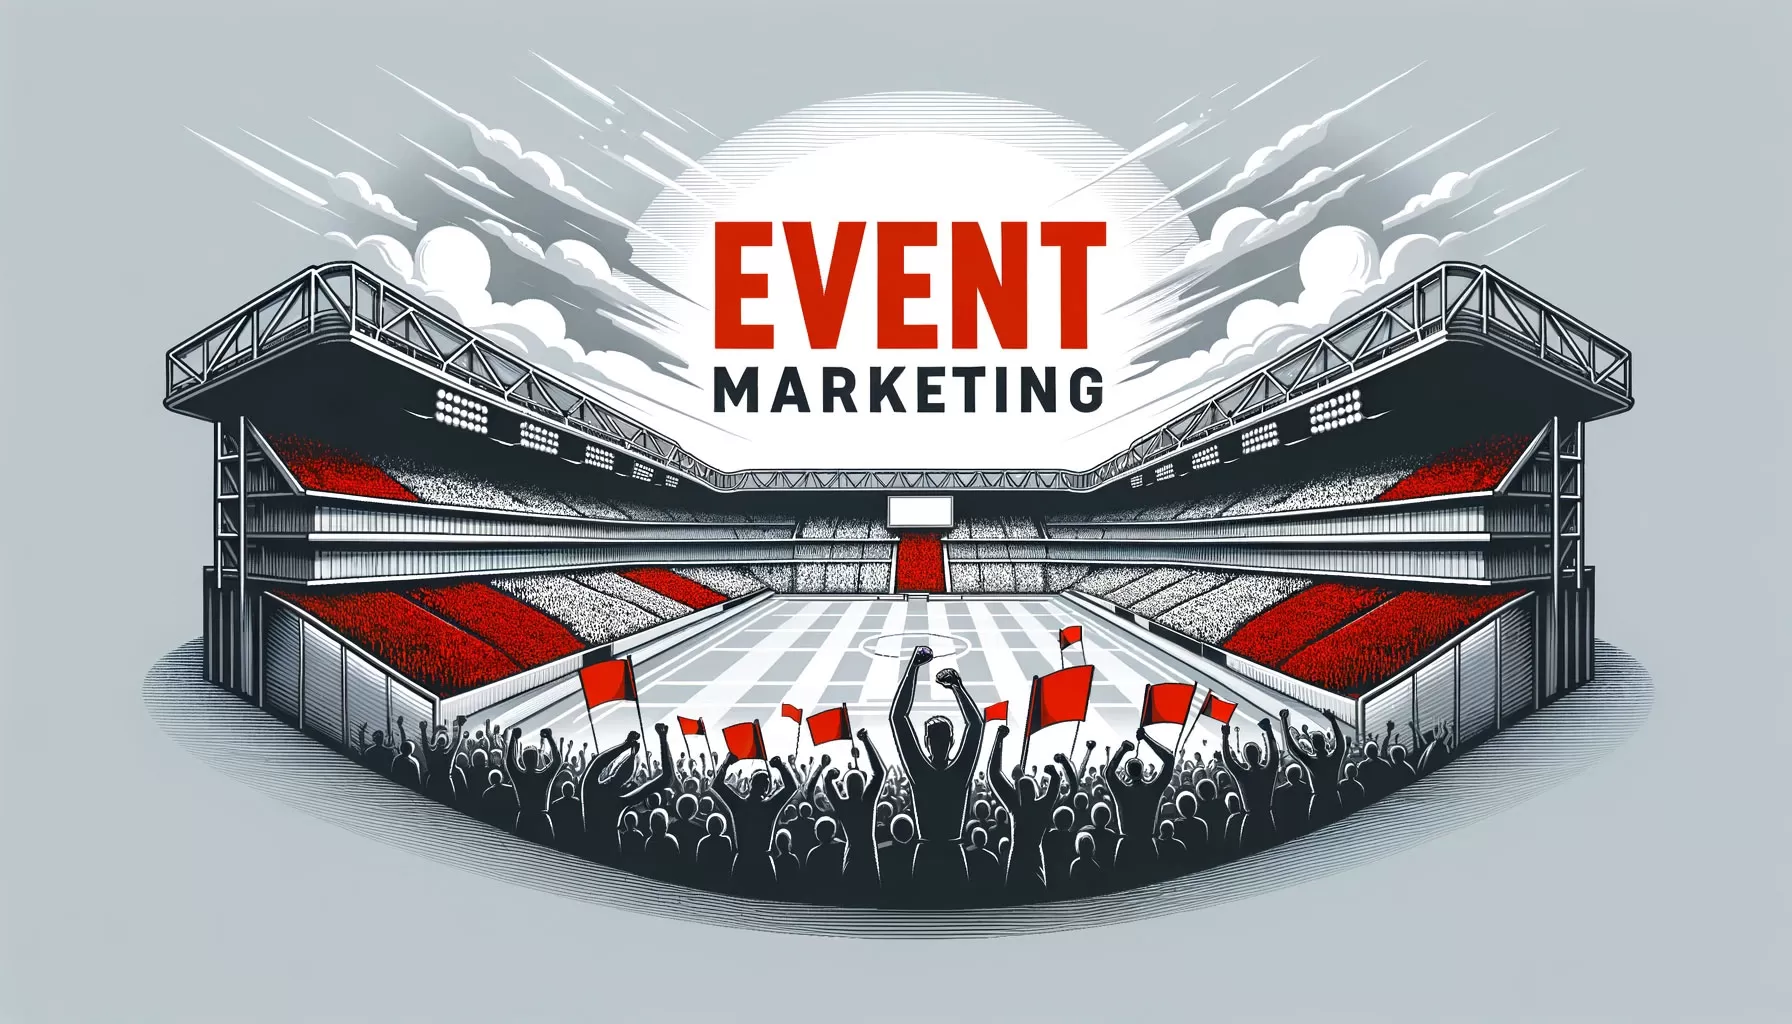 Event Marketing
